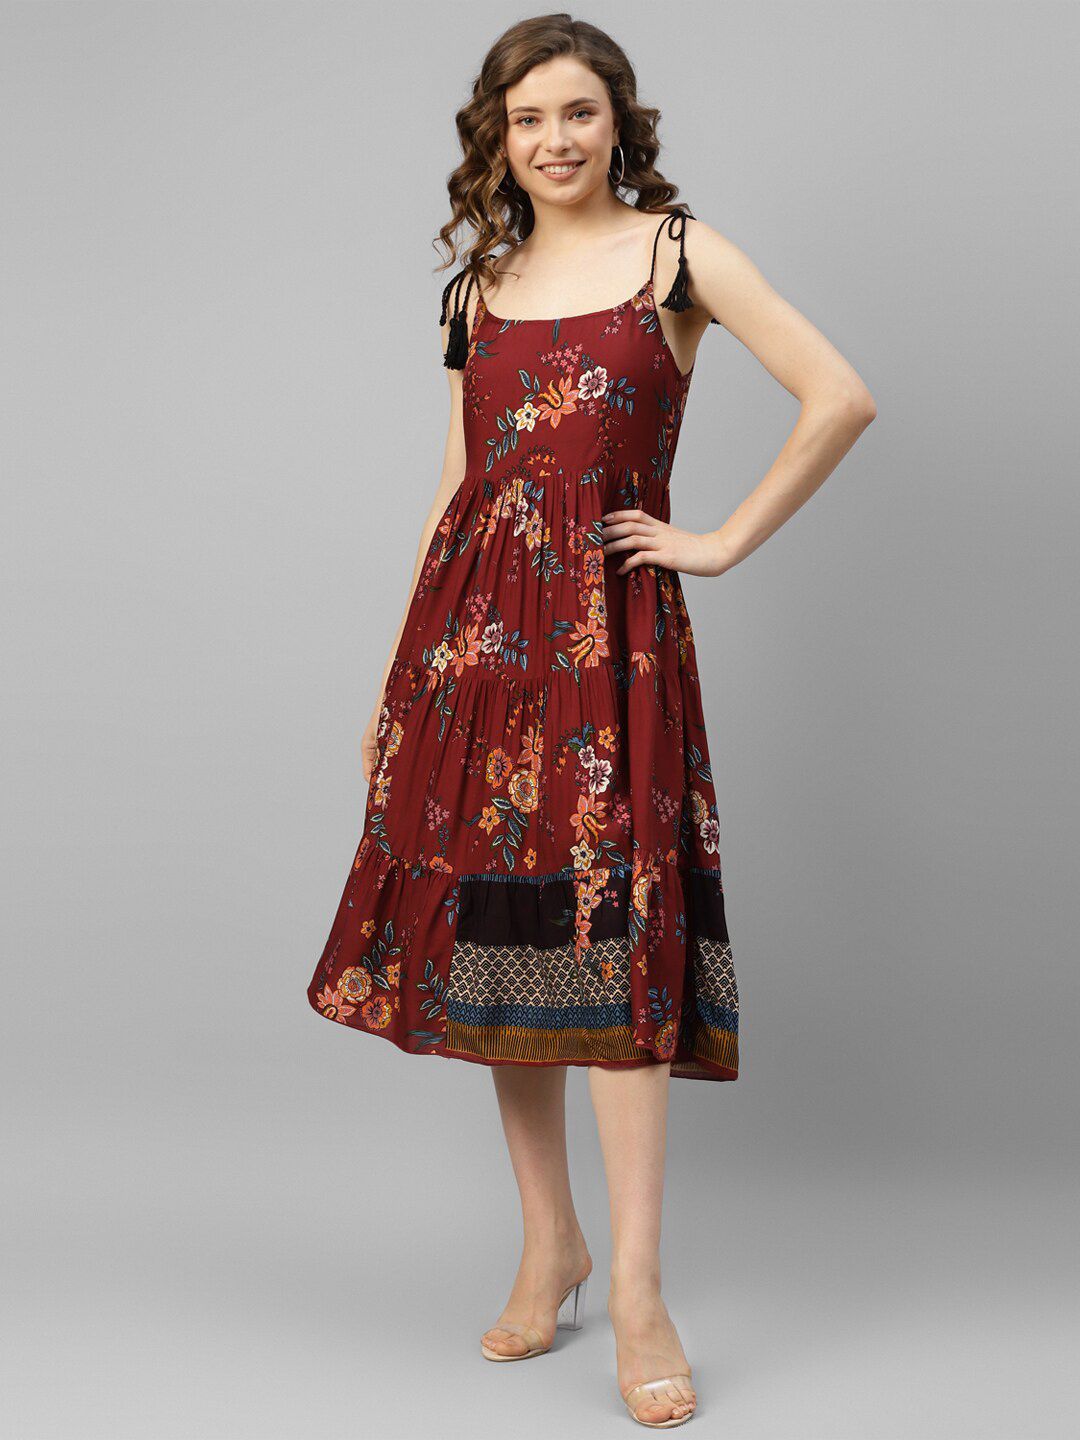 DEEBACO Maroon Ethnic Motifs Print Fit & Flare Midi Dress Price in India